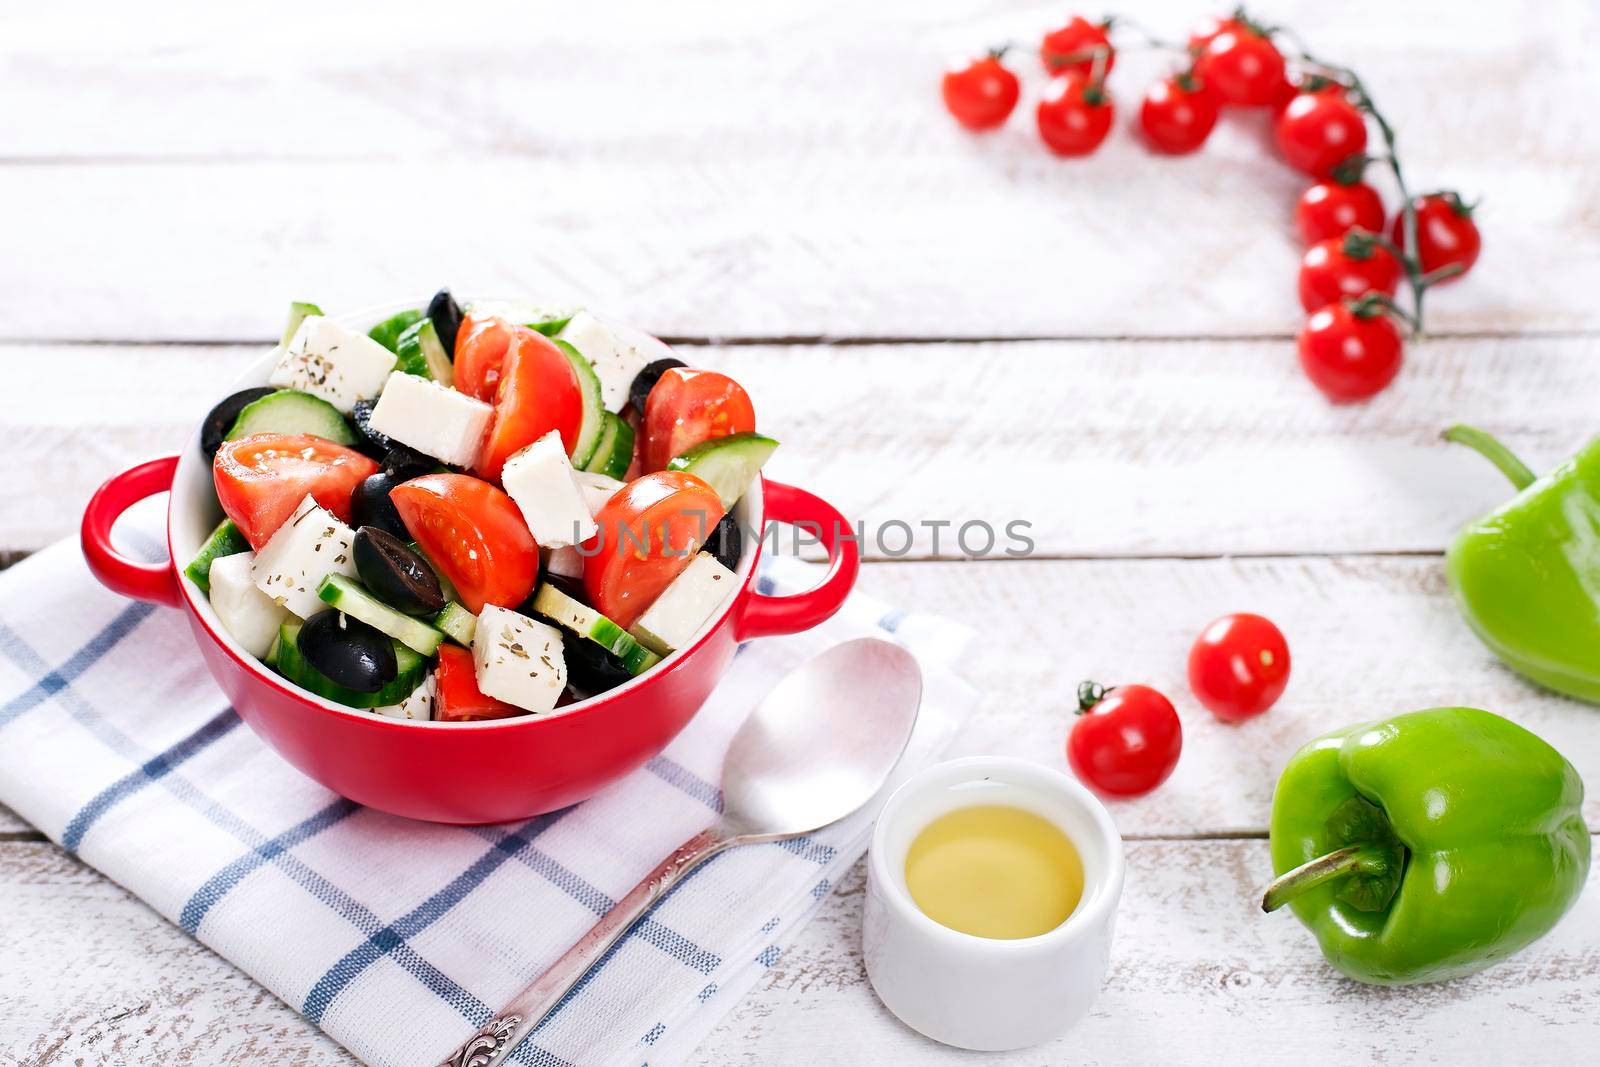 Greek salad in red boul by Jyliana